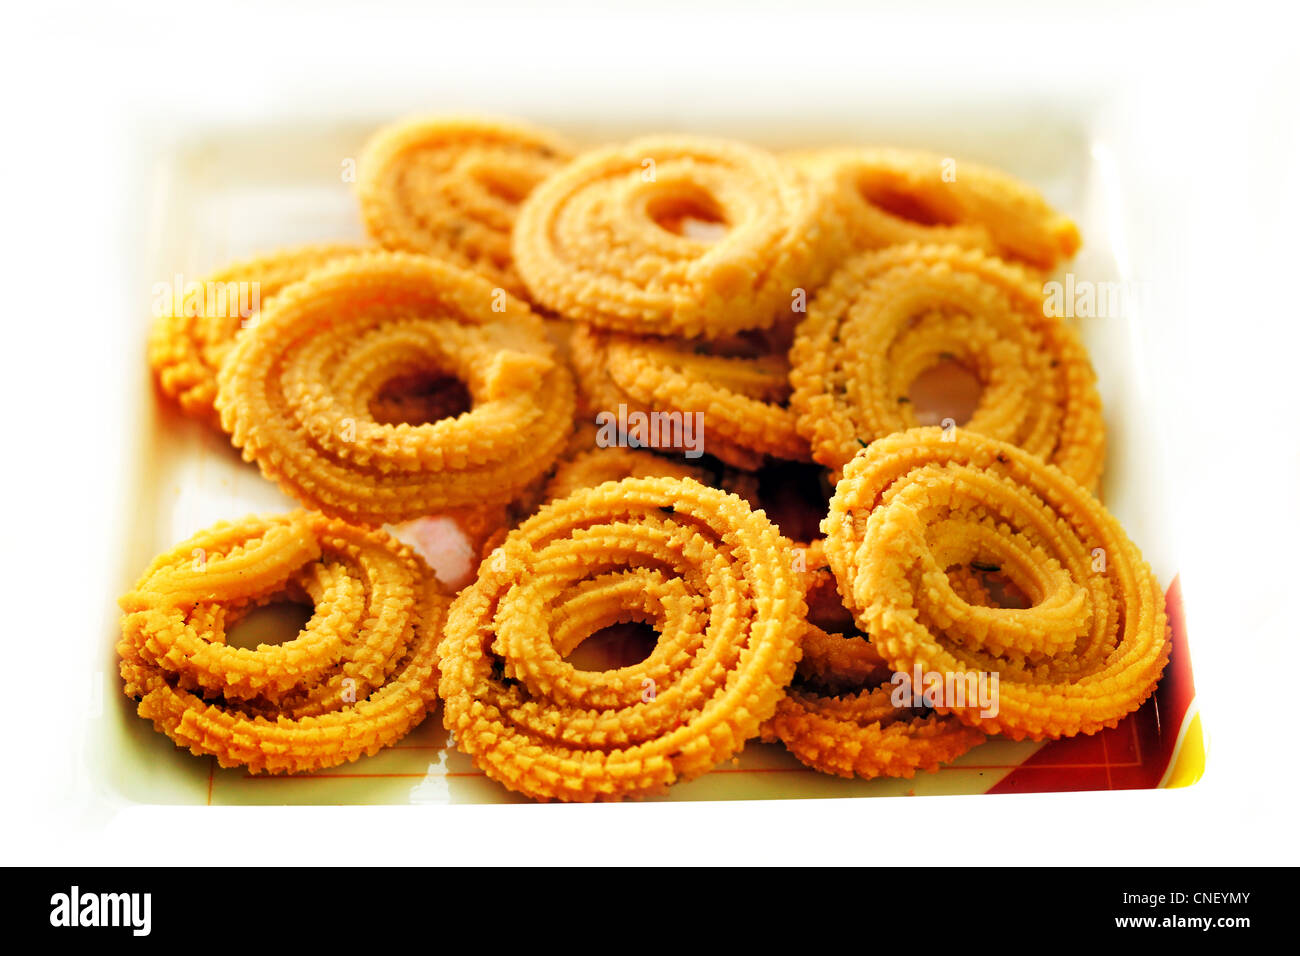 Popular south indian deep fried snack called murukku or muruku. Stock Photo